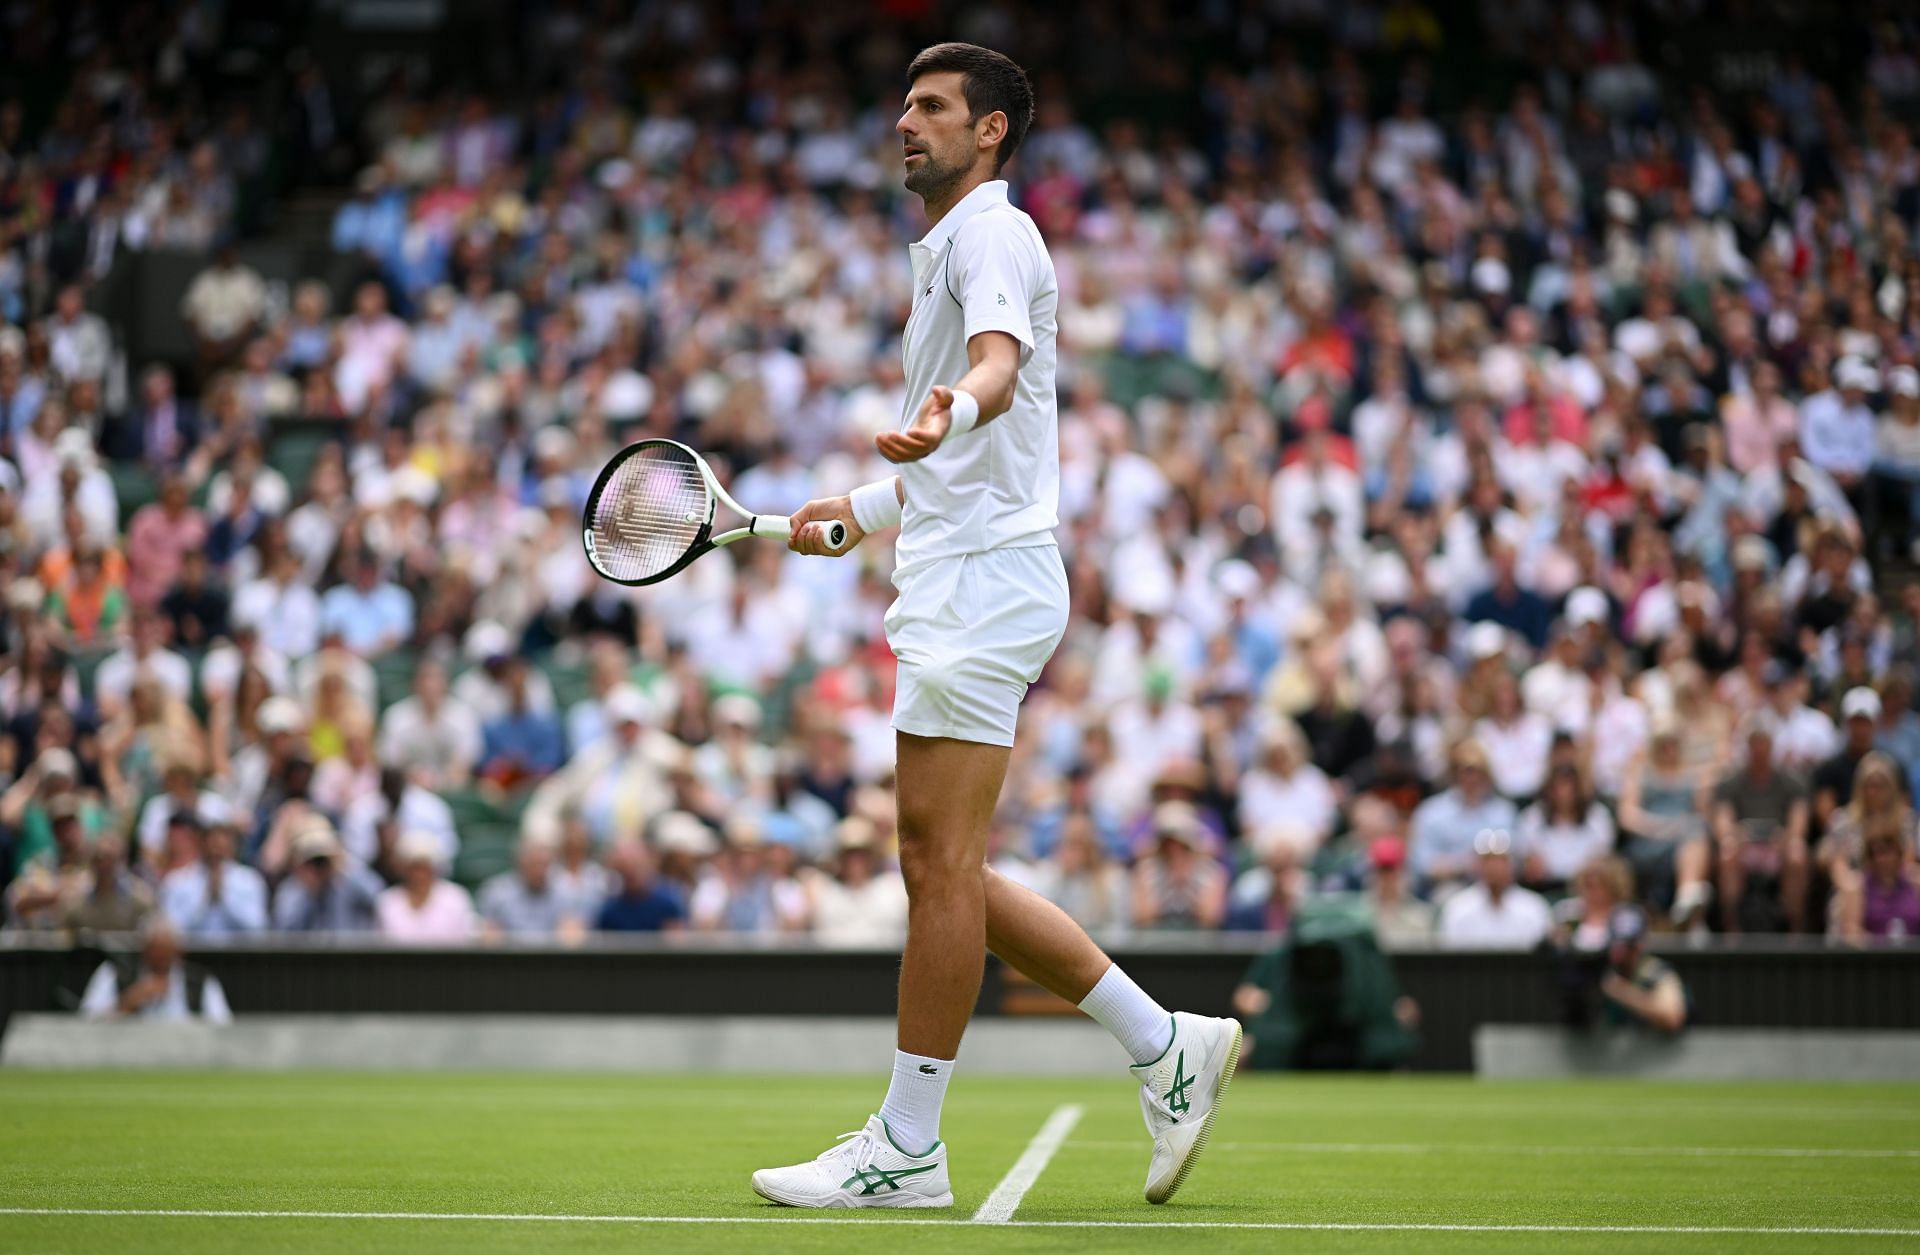 Novak Djokovic will face Miomir Kecmanovic in the third round of Wimbledon